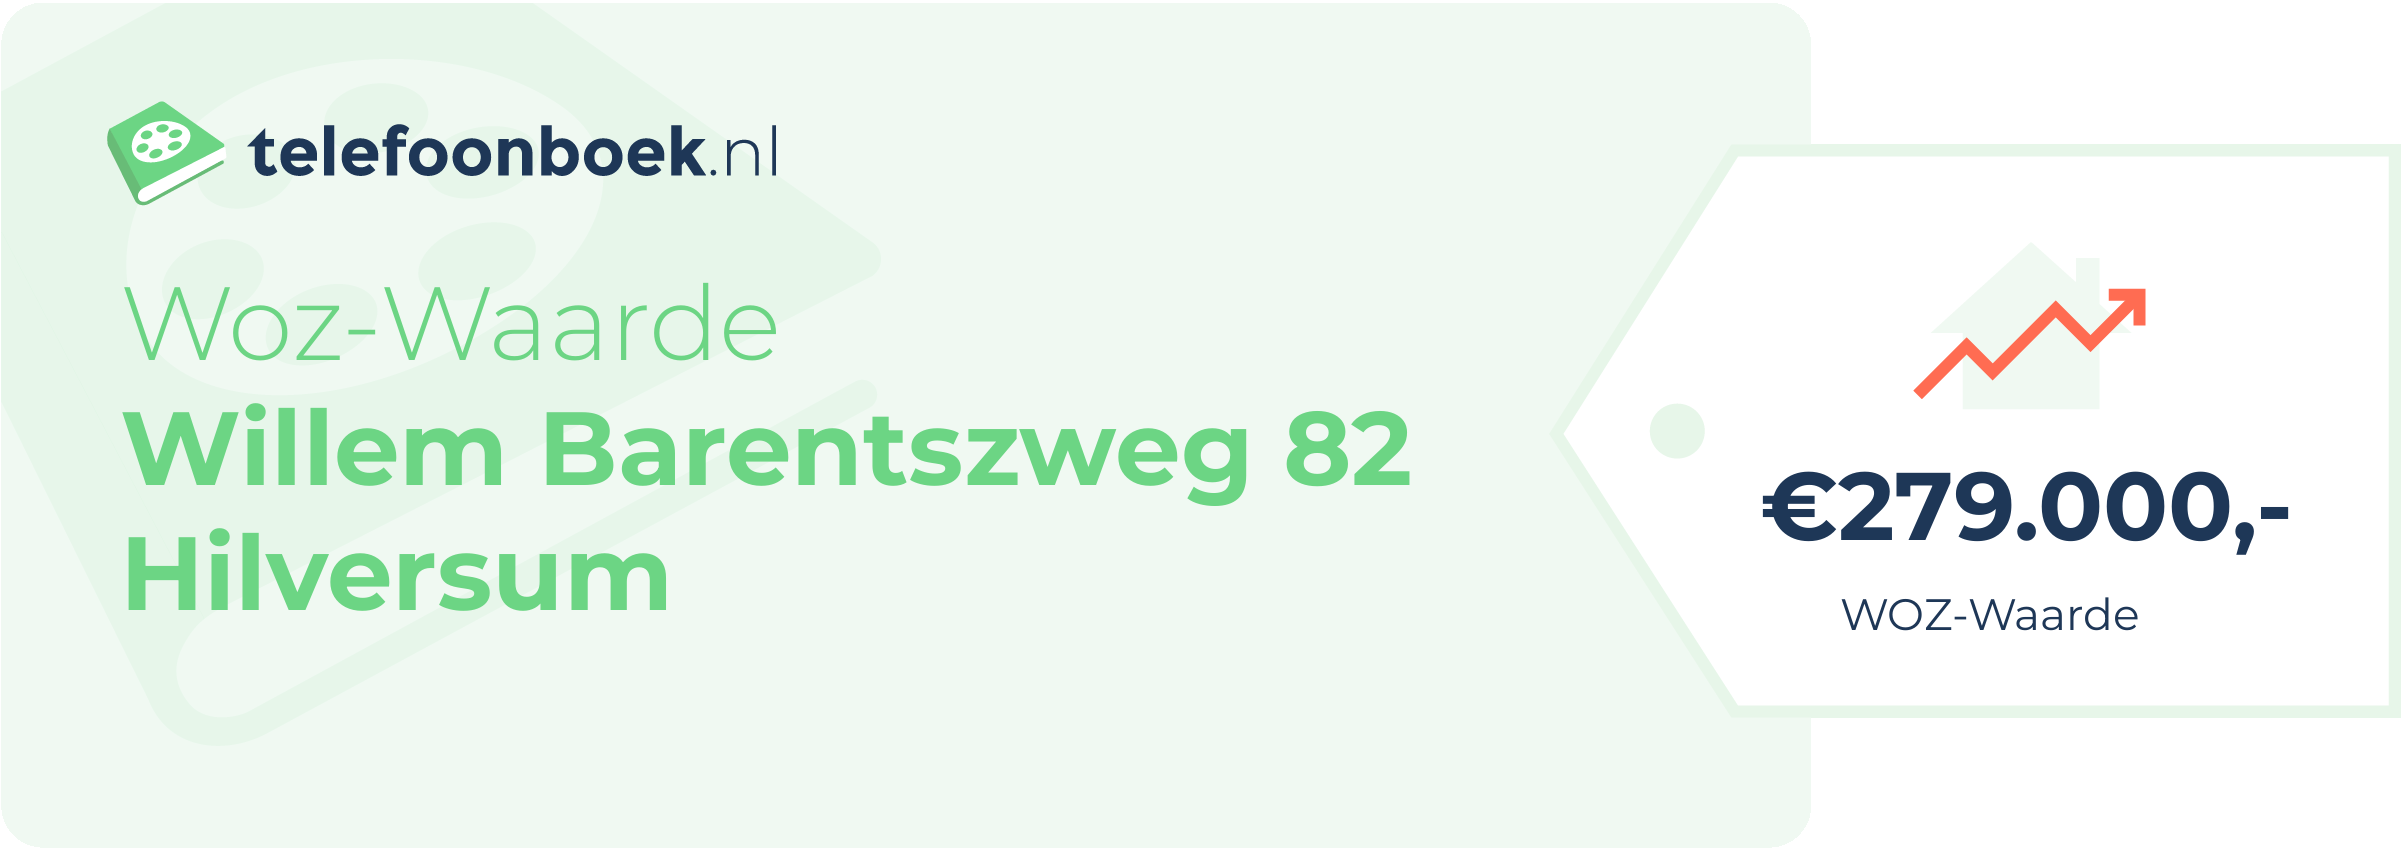 WOZ-waarde Willem Barentszweg 82 Hilversum